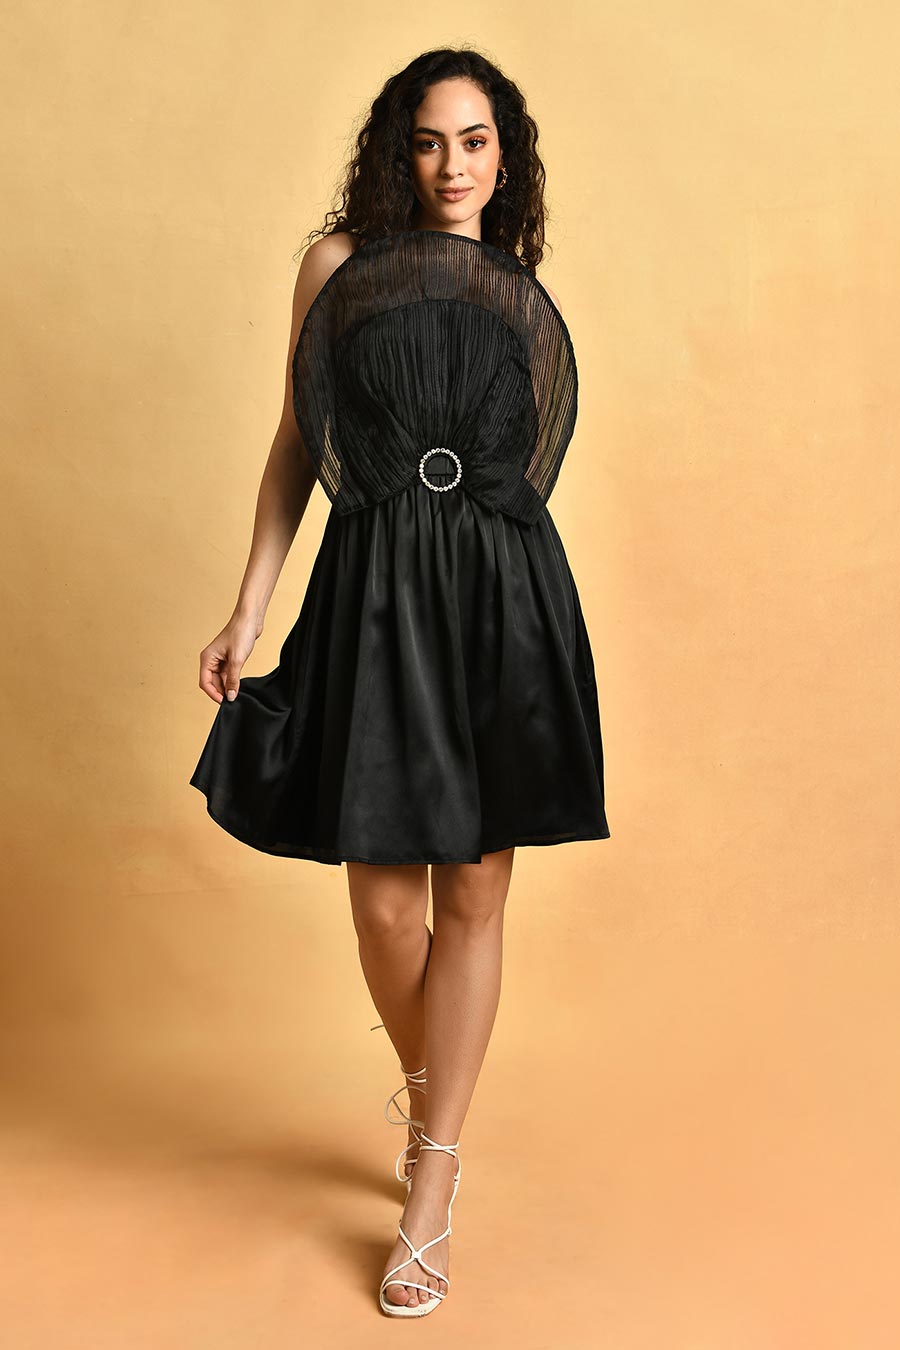 Solid Black Dress